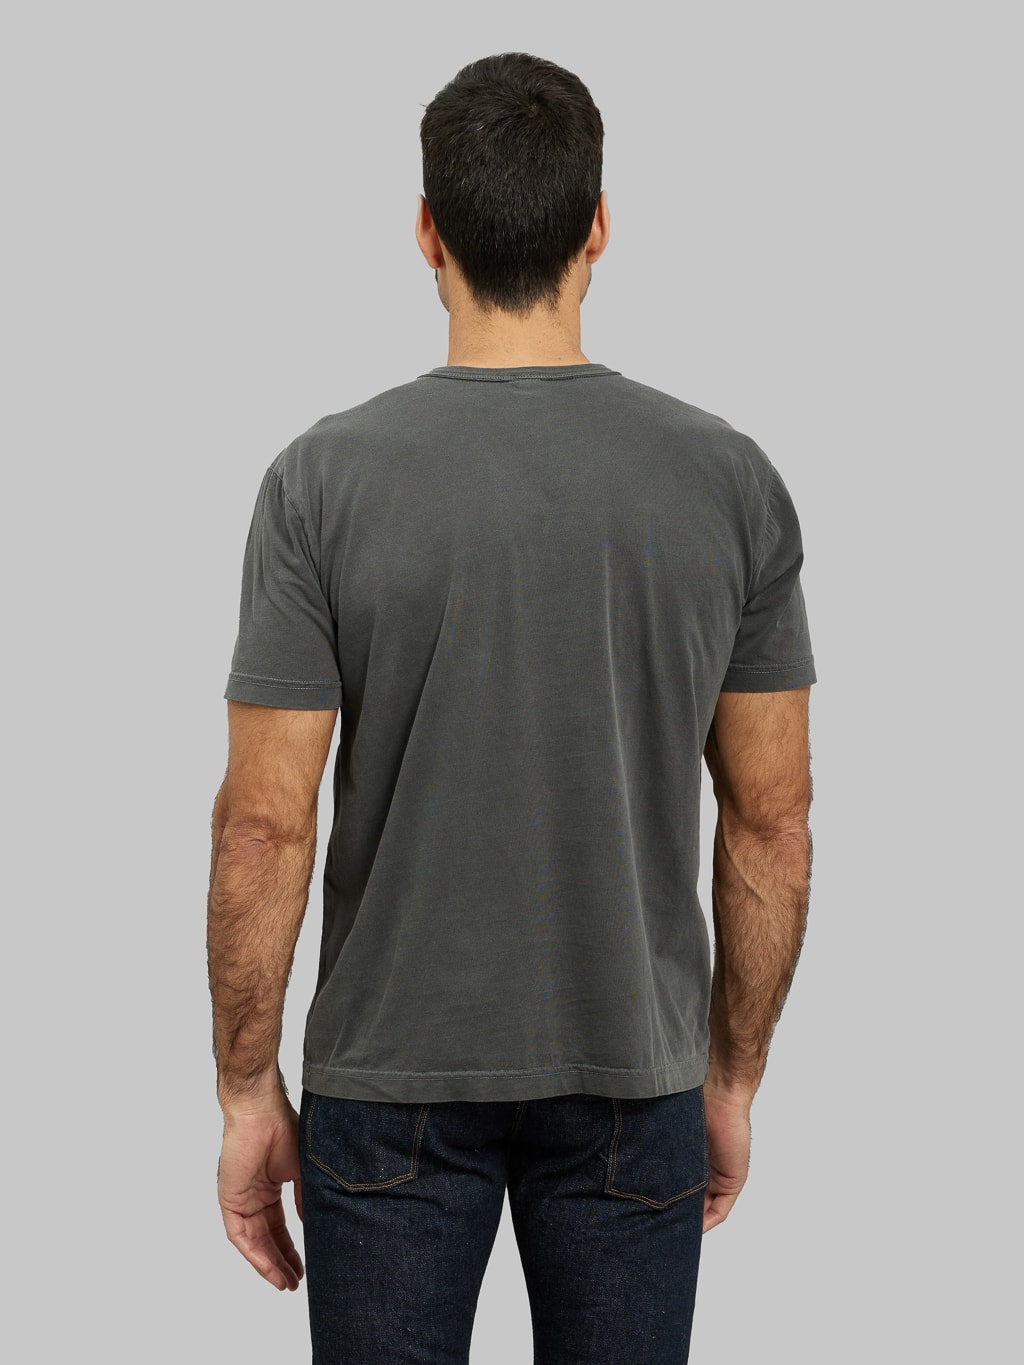 3sixteen Garment Dyed Pima Pocket Tshirt smoke model back fit